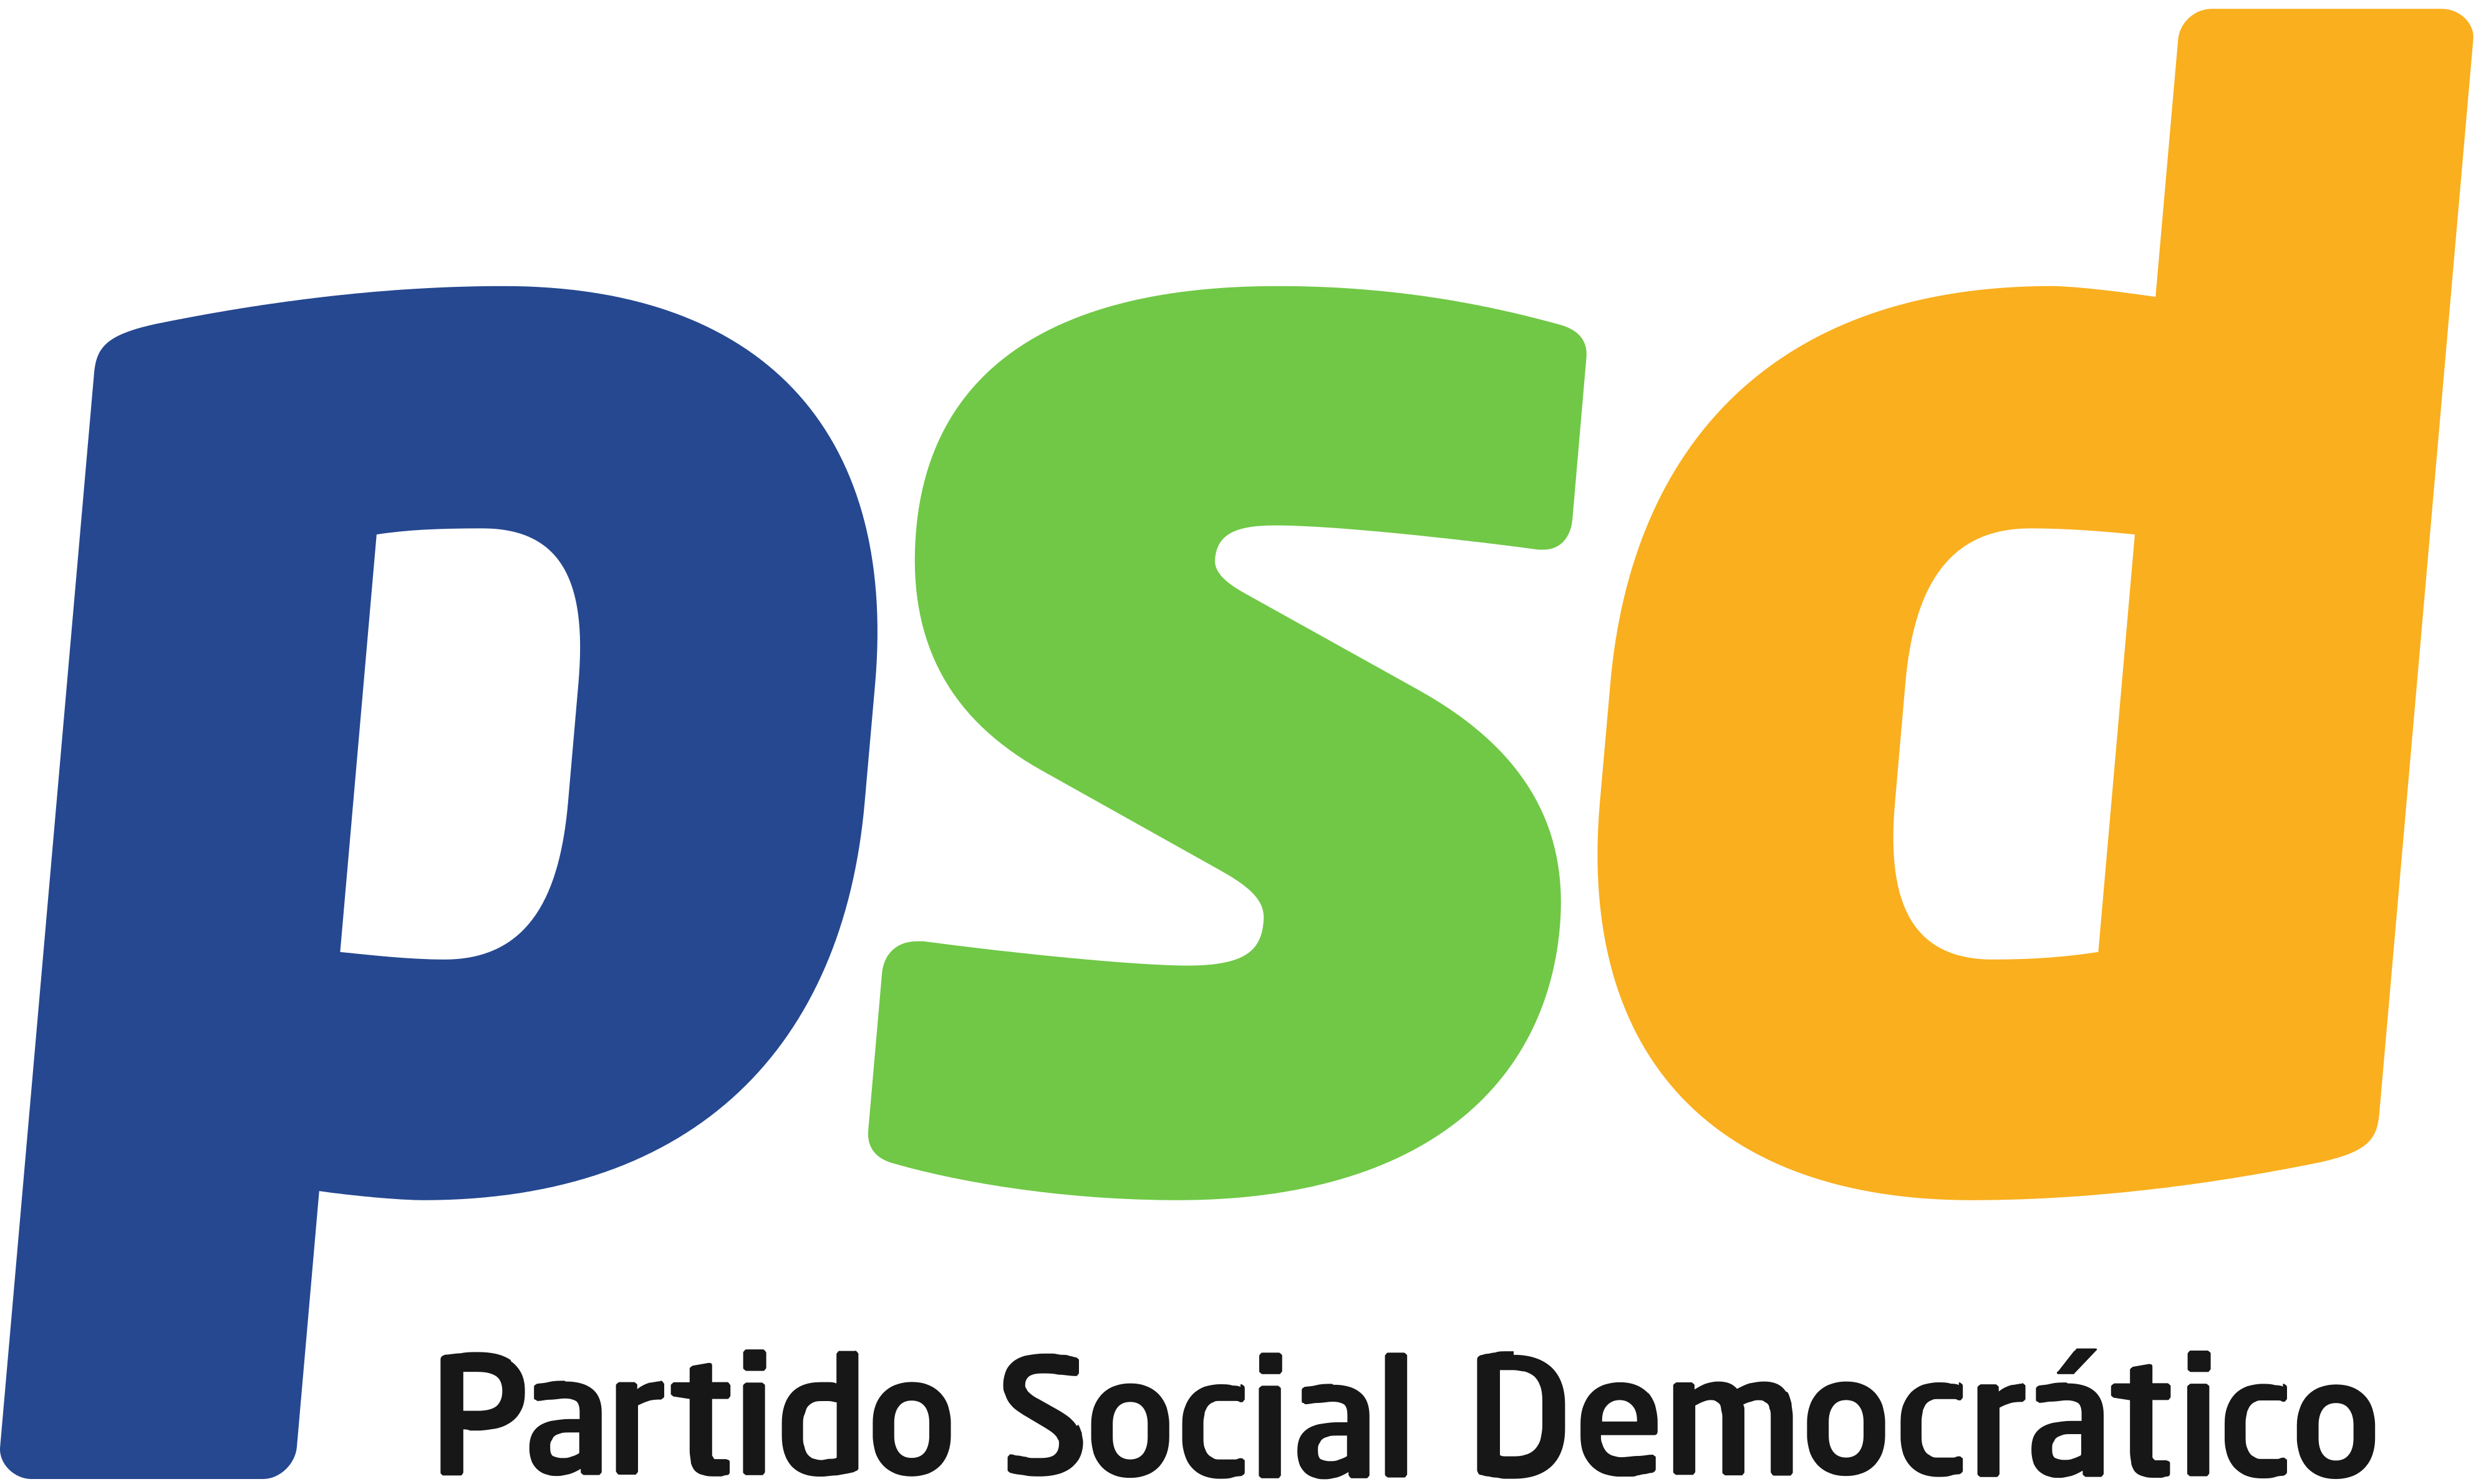 PSD Logo - Partido Social Democrático Logo.